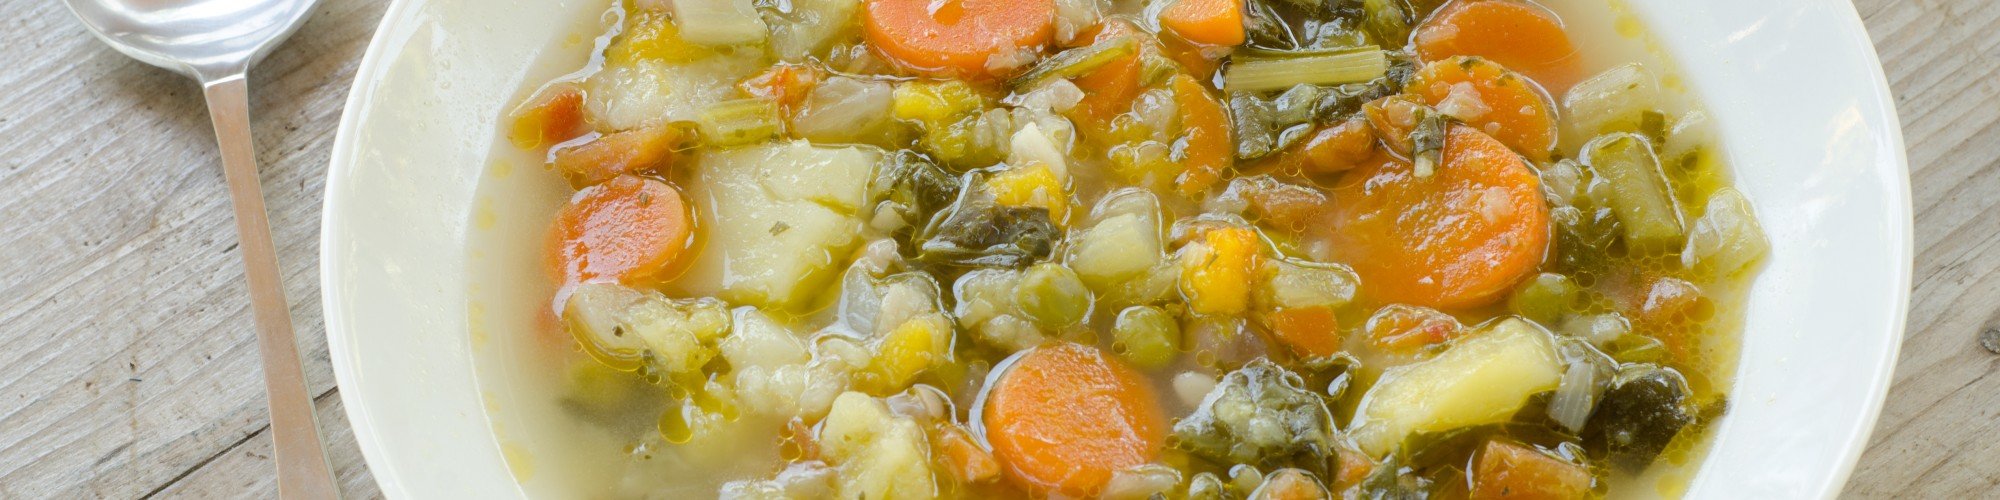 Victory Garden Vegetable Soup Recipe by Nancy Alexander